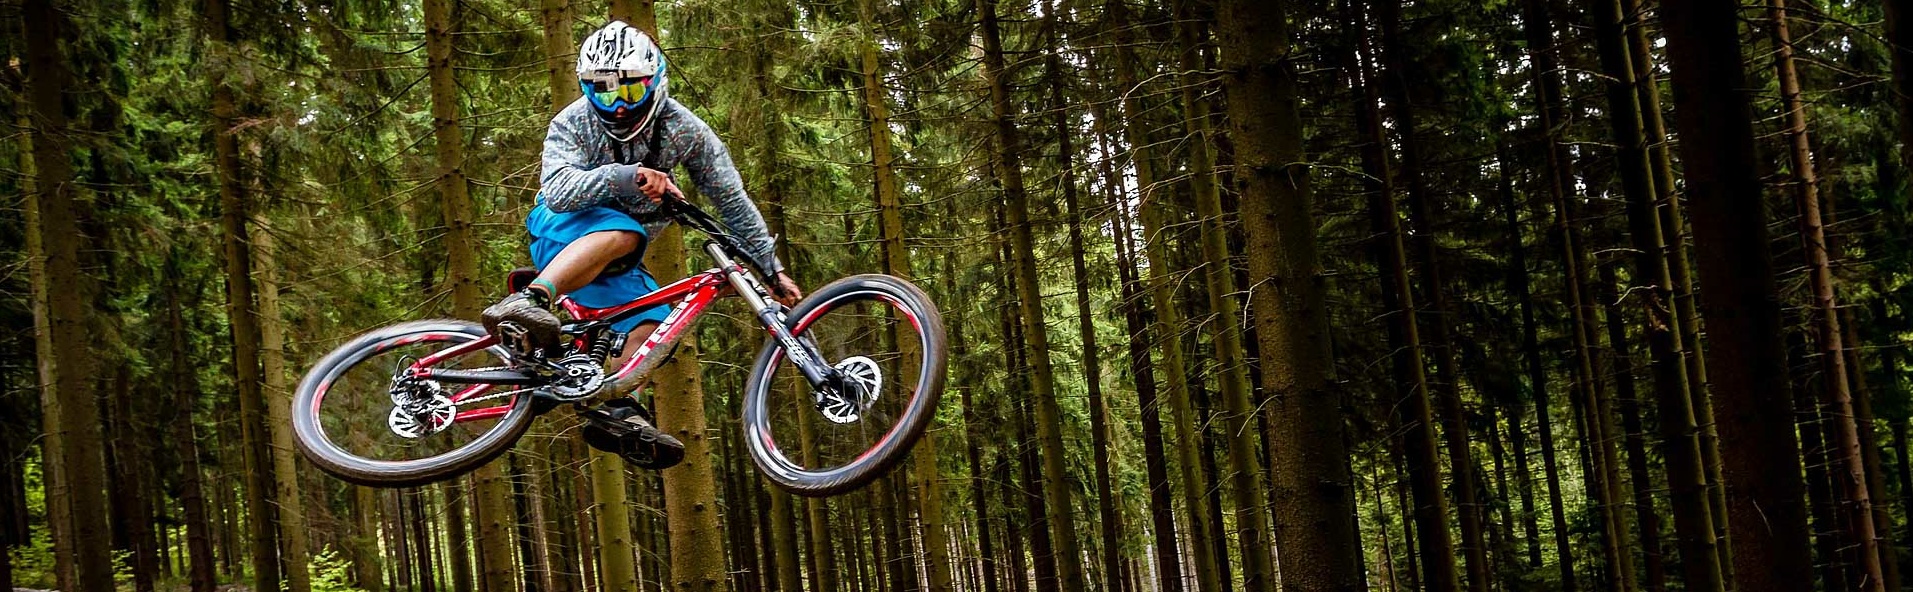 Biker jumpt im Wald